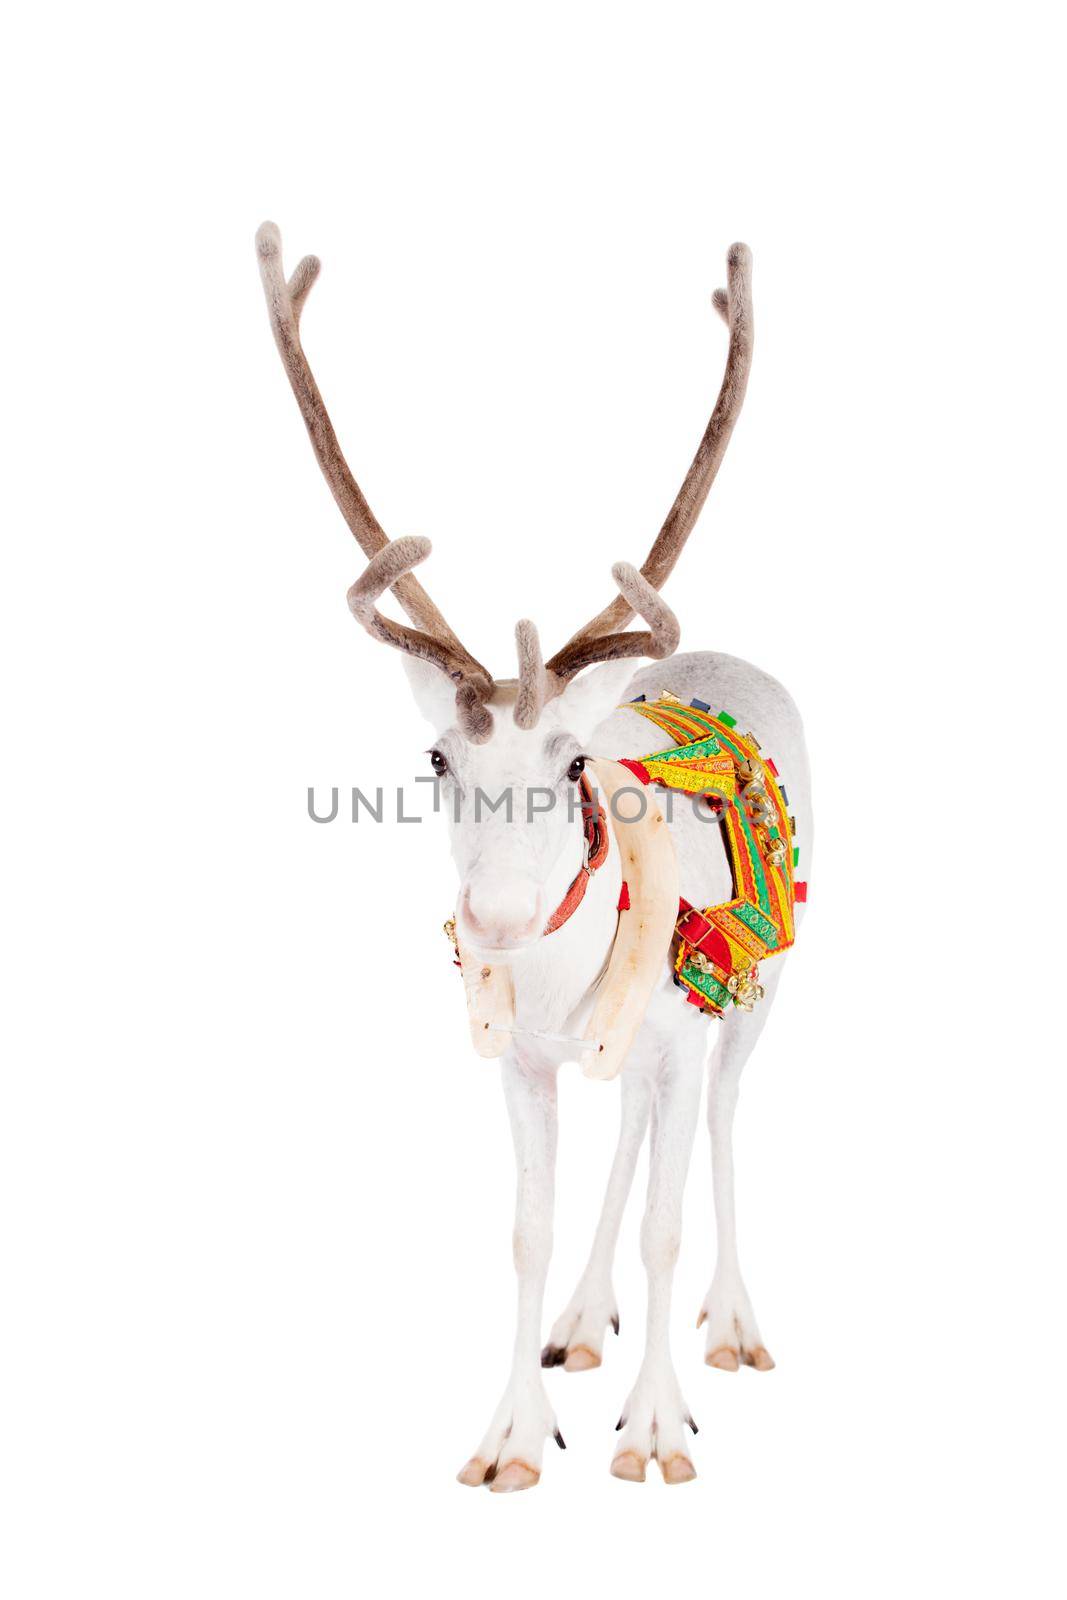 Reindeer wearing traditional harness, Rangifer tarandus, on white